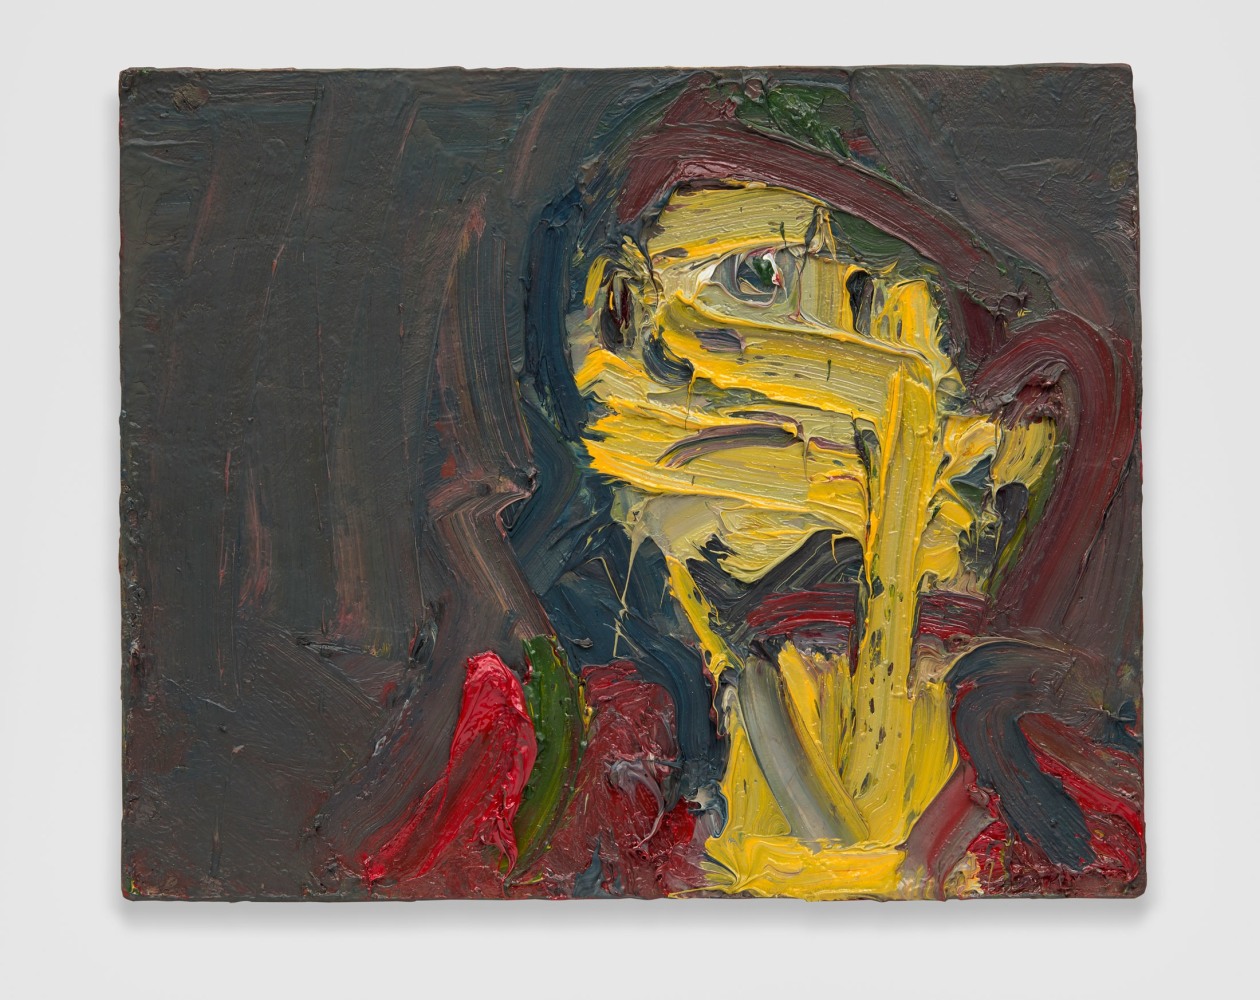 Frank Auerbach
Head of J.Y.M., 1978
Oil on board
14 5/8 x 18 inches
(37.1 x 45.7 cm)
Private collection, Topanga, CA
Courtesy of L.A. Louver, Venice, CA